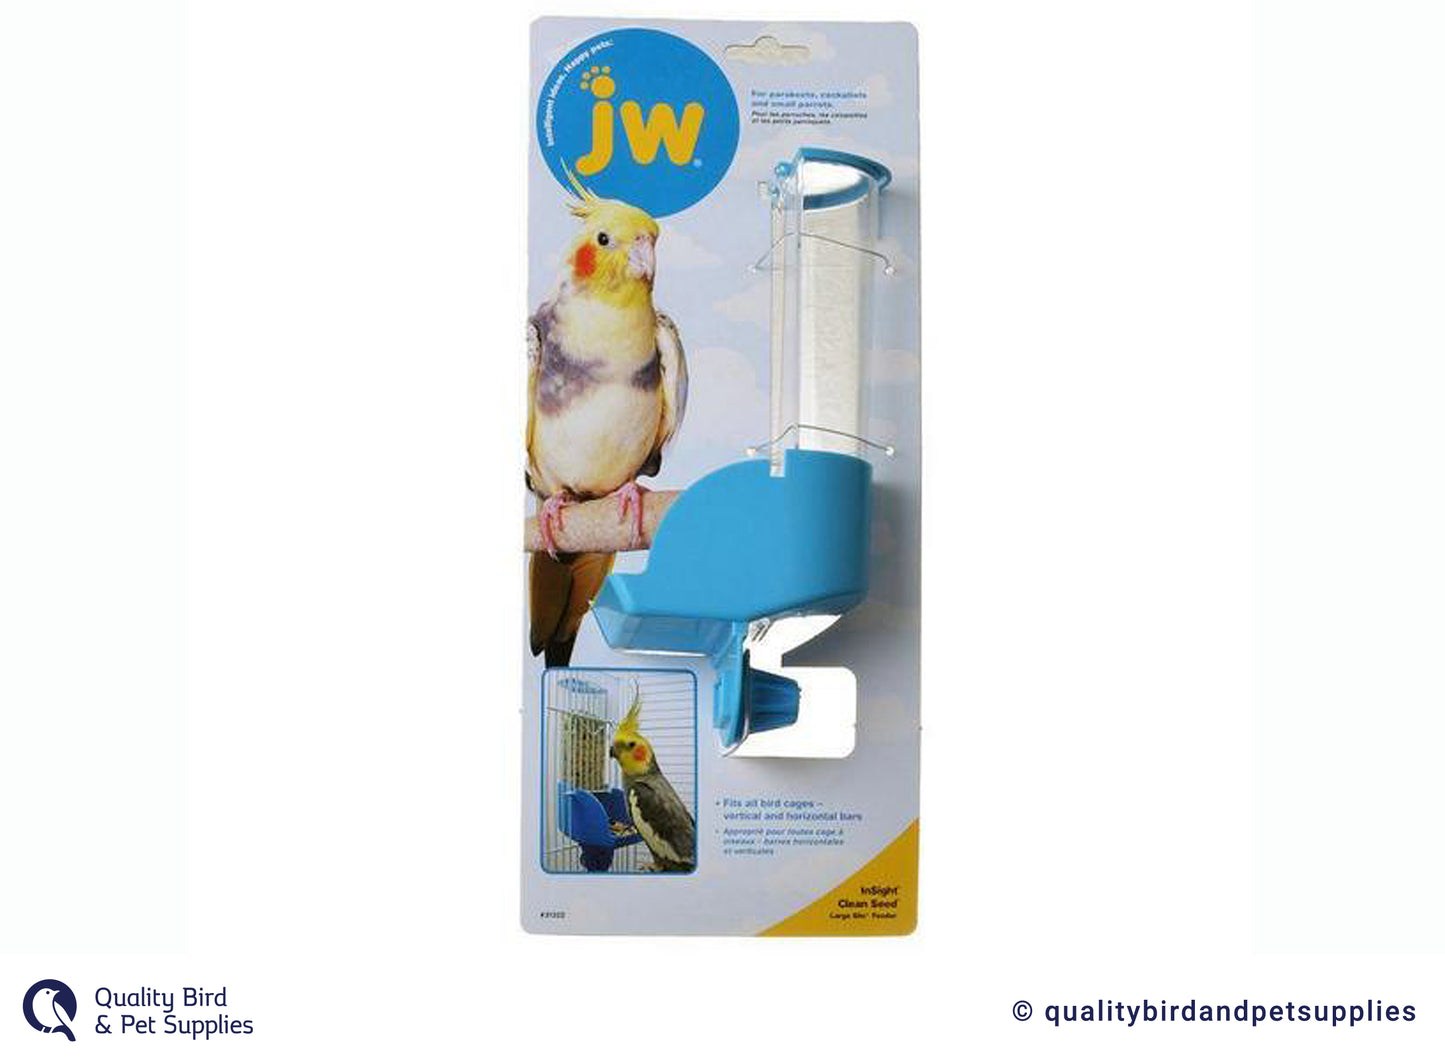 JW Insight Large Silo Bird Feeder